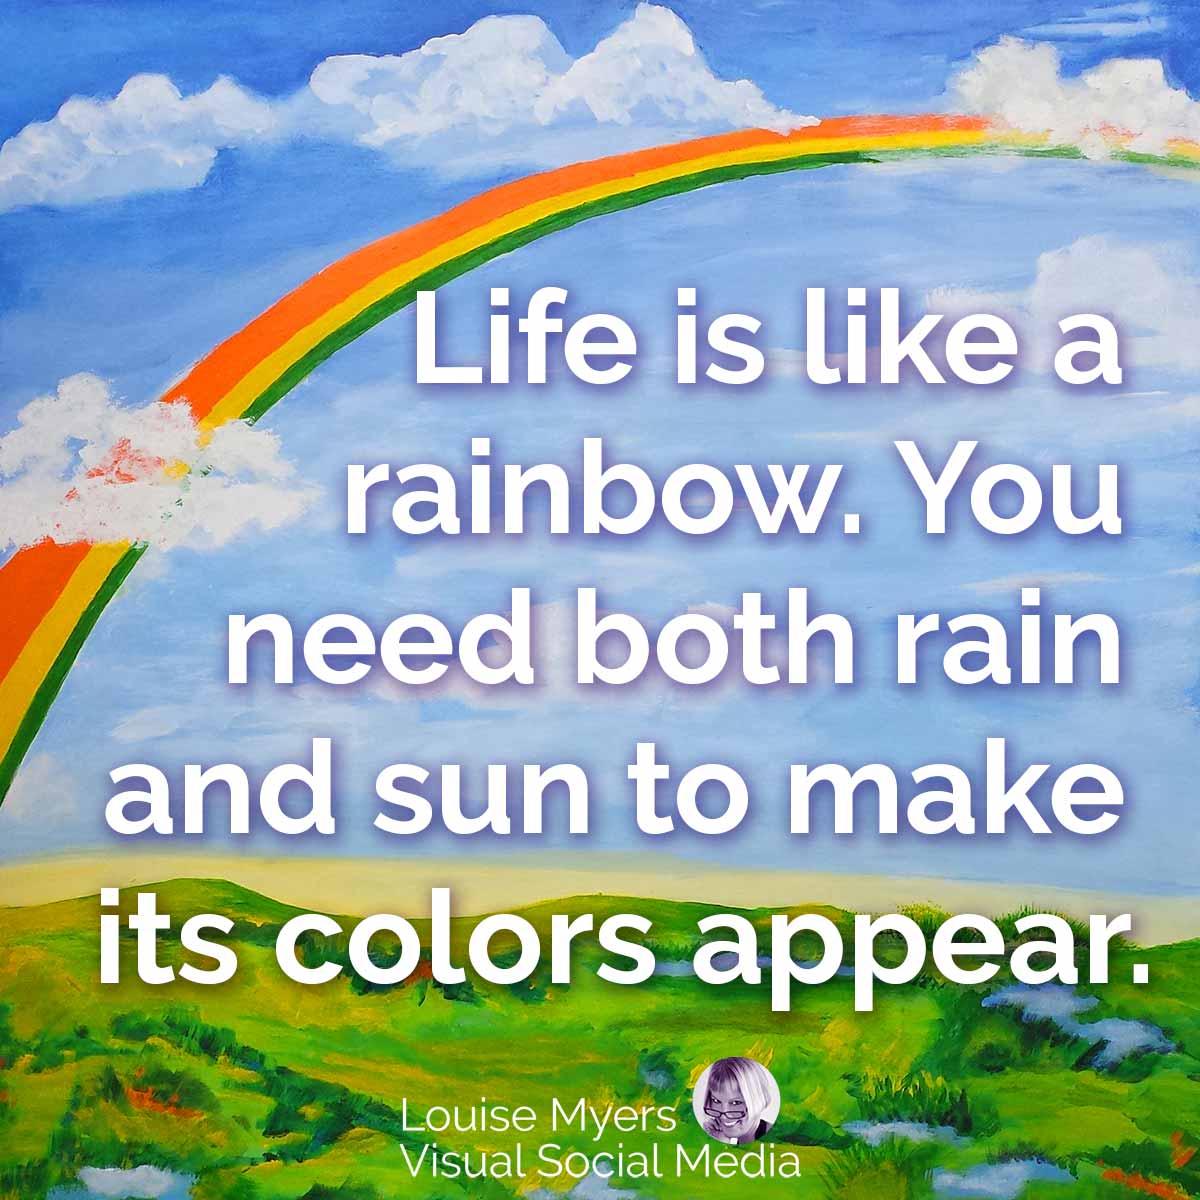 painting of rainbow in blue sky says life is like a rainbow, you need both rain and sun.